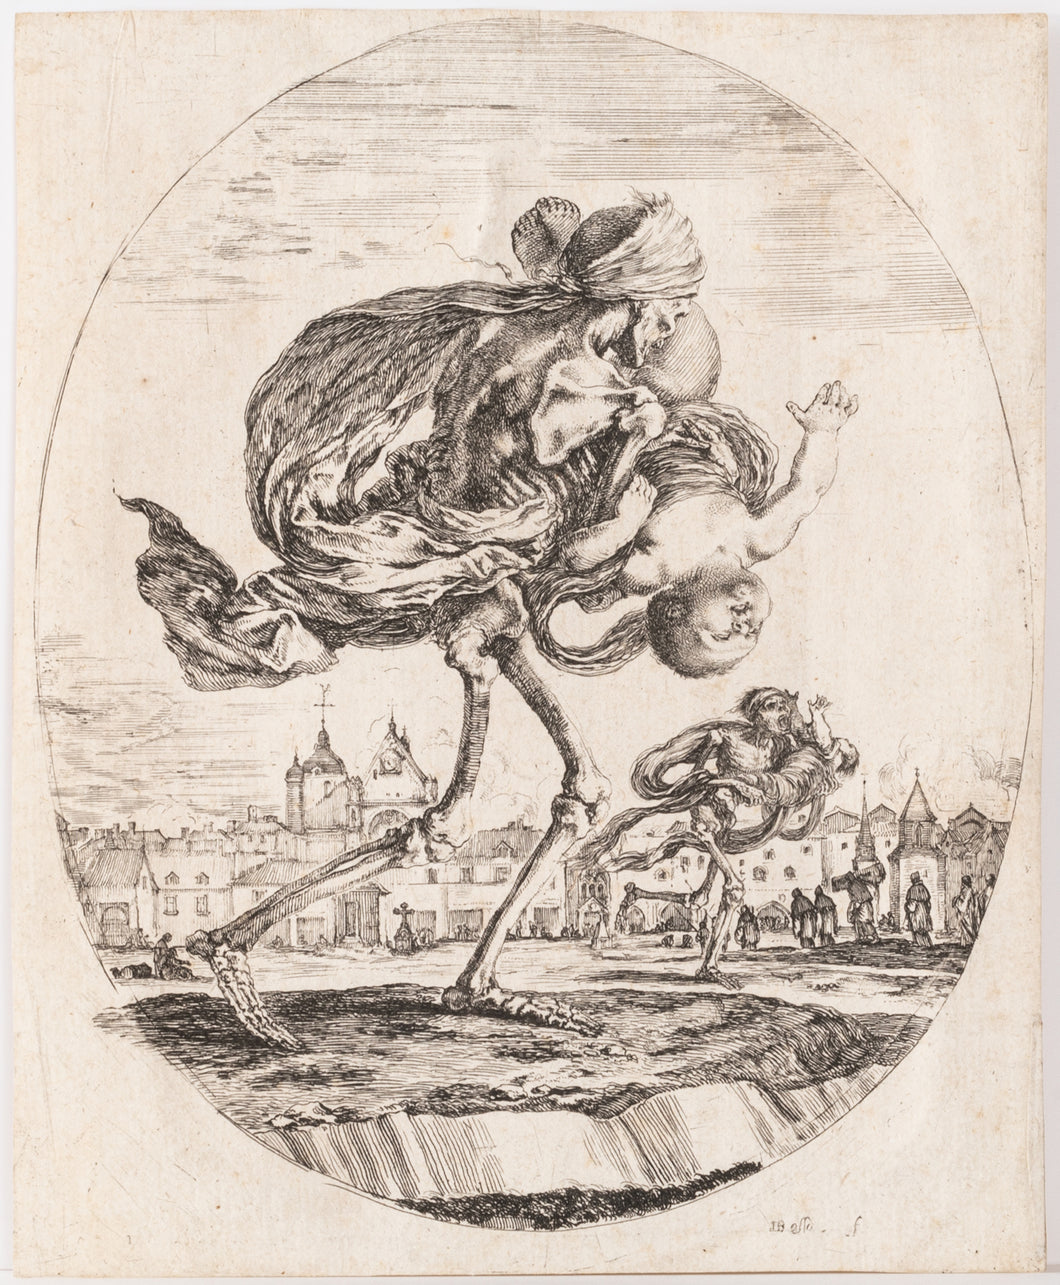 La Mort portant un enfant.  c.1648.